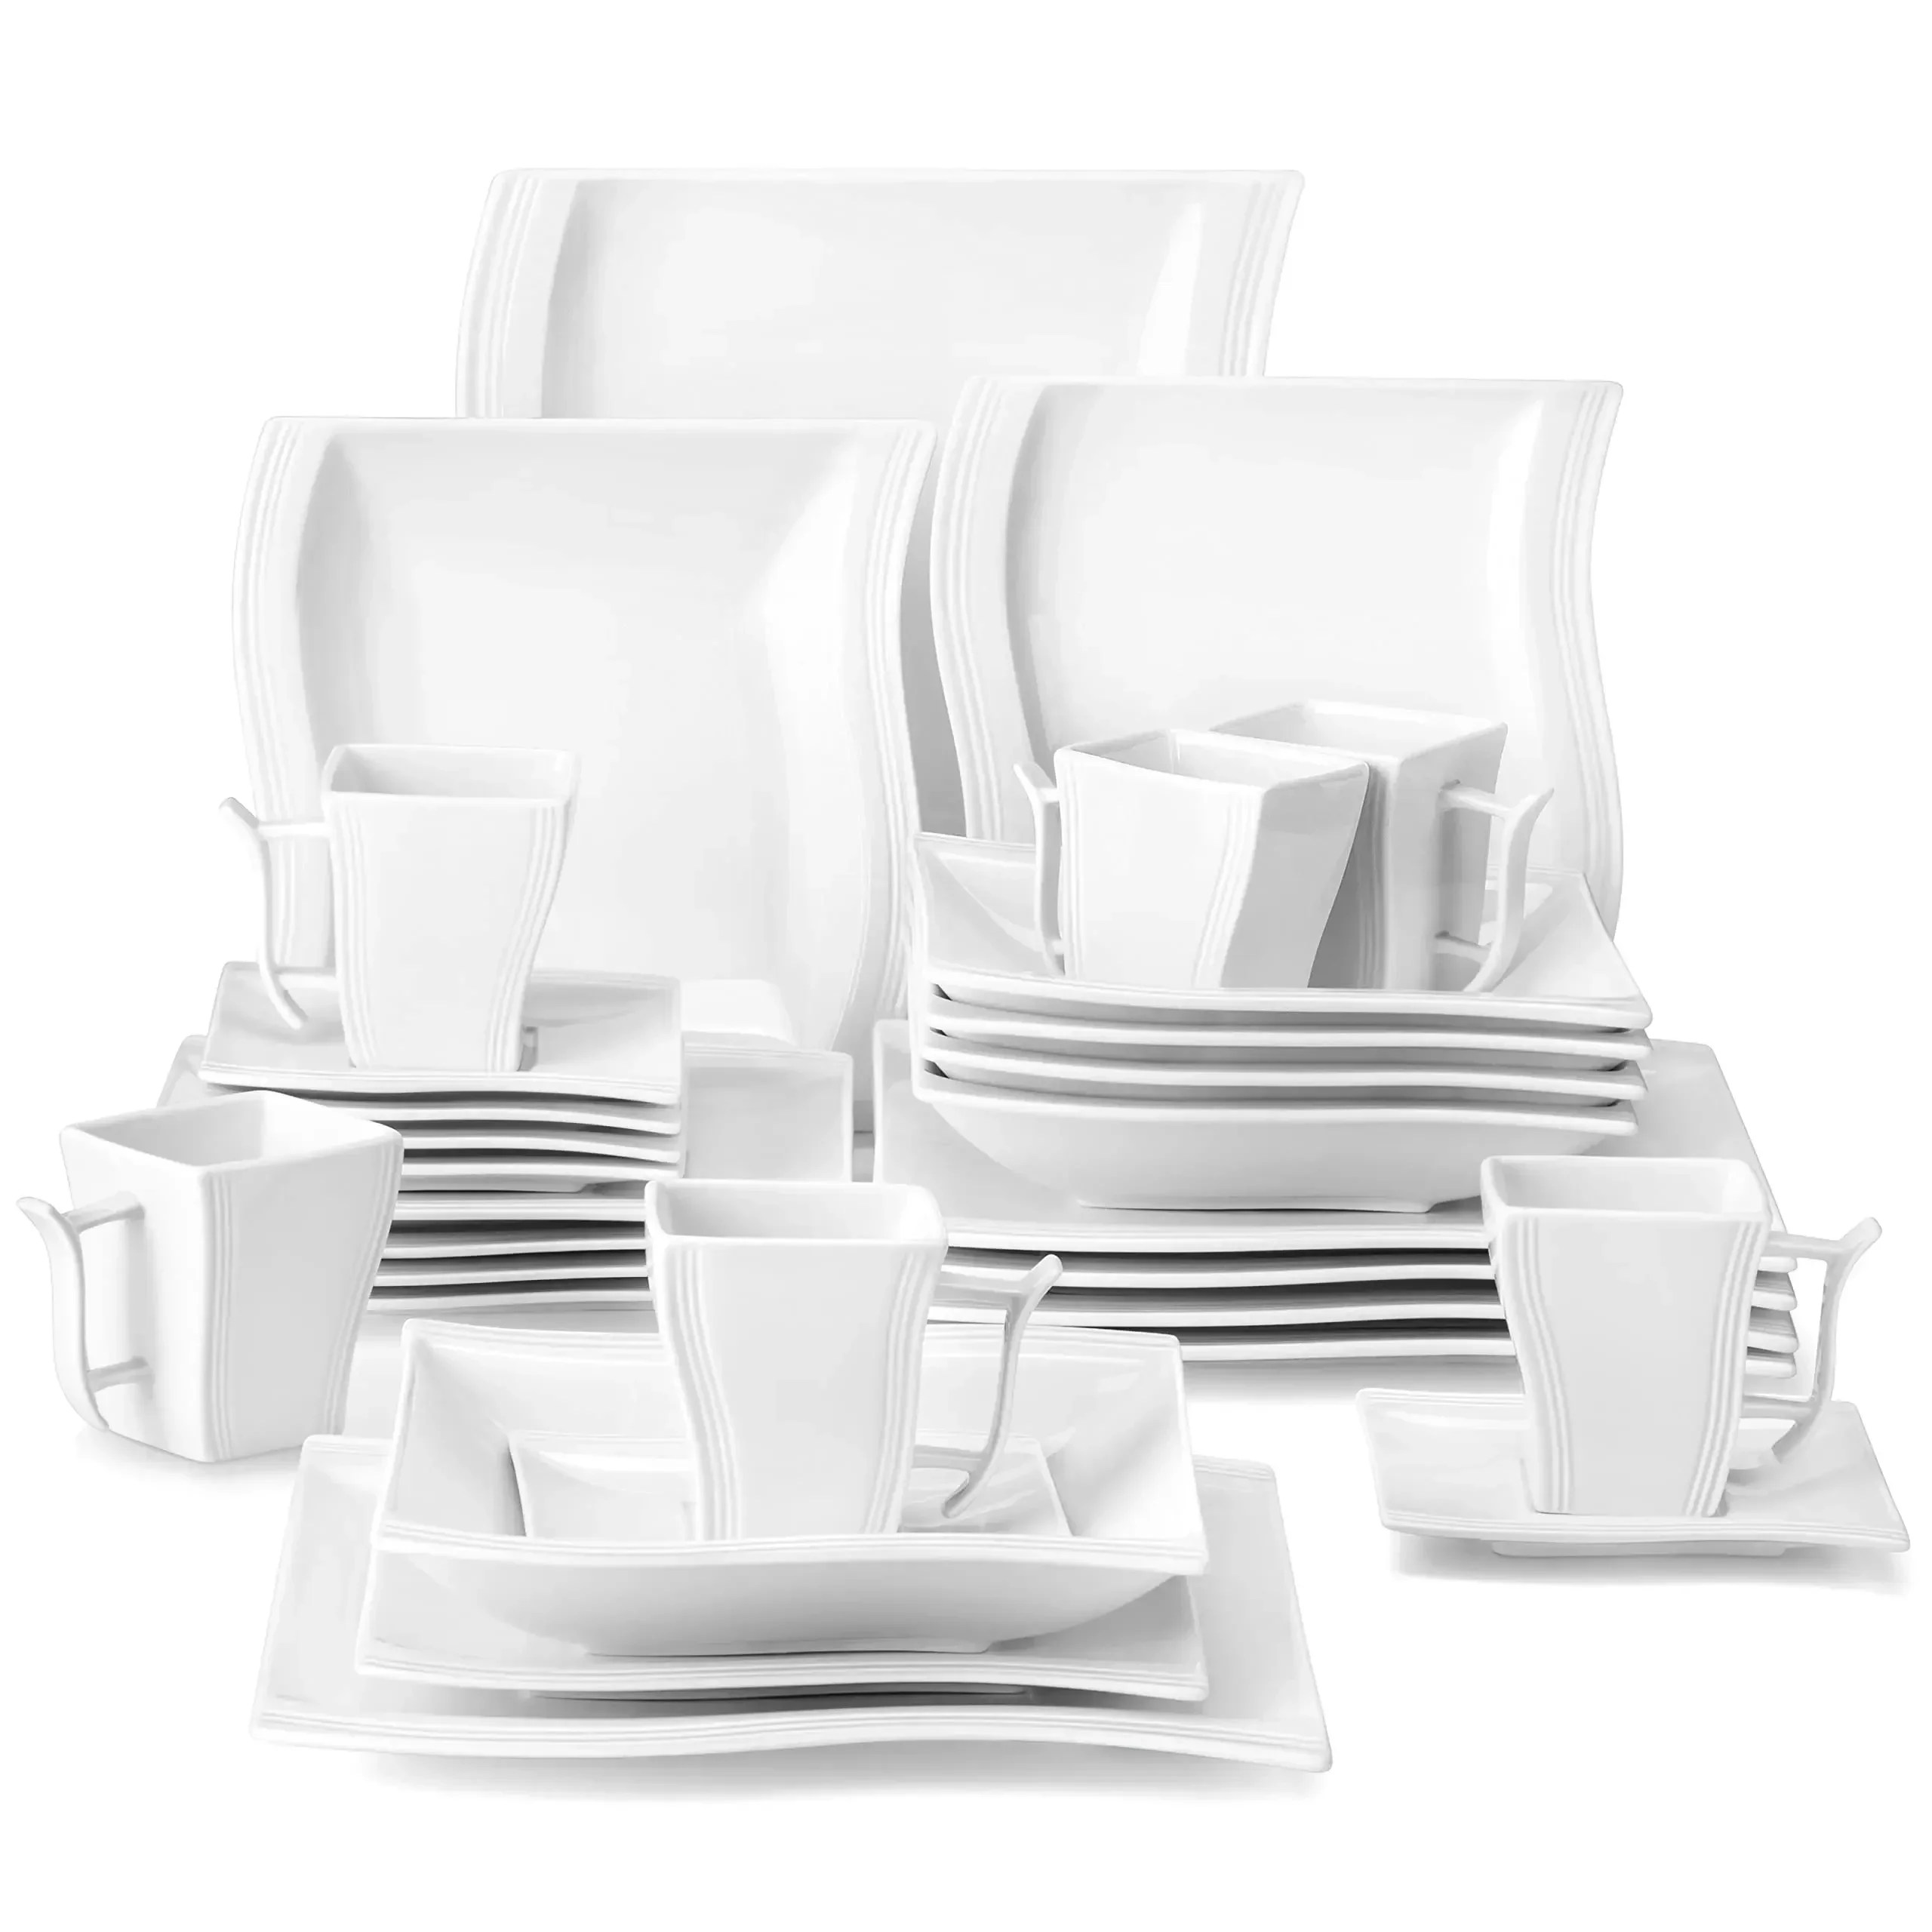 

MALACASA Ivory White Dinnerware Set, 30-Piece Porcelain Dinnerware Sets, Modern Square Dinner Set Plates and Bowls for Dessert,